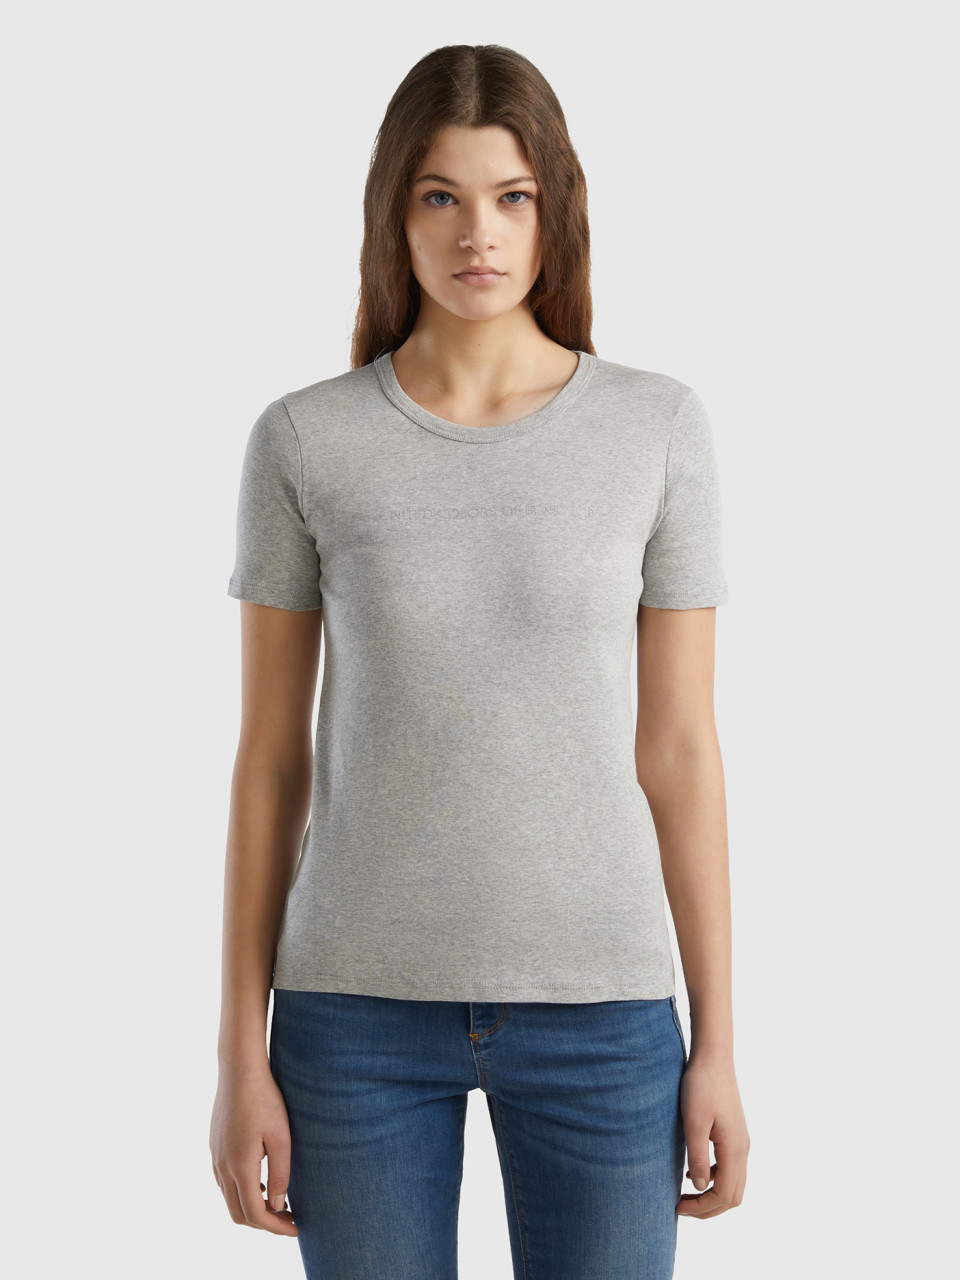 Benetton, T-shirt In 100% Cotton With Glitter Print Logo, Light Gray, Women